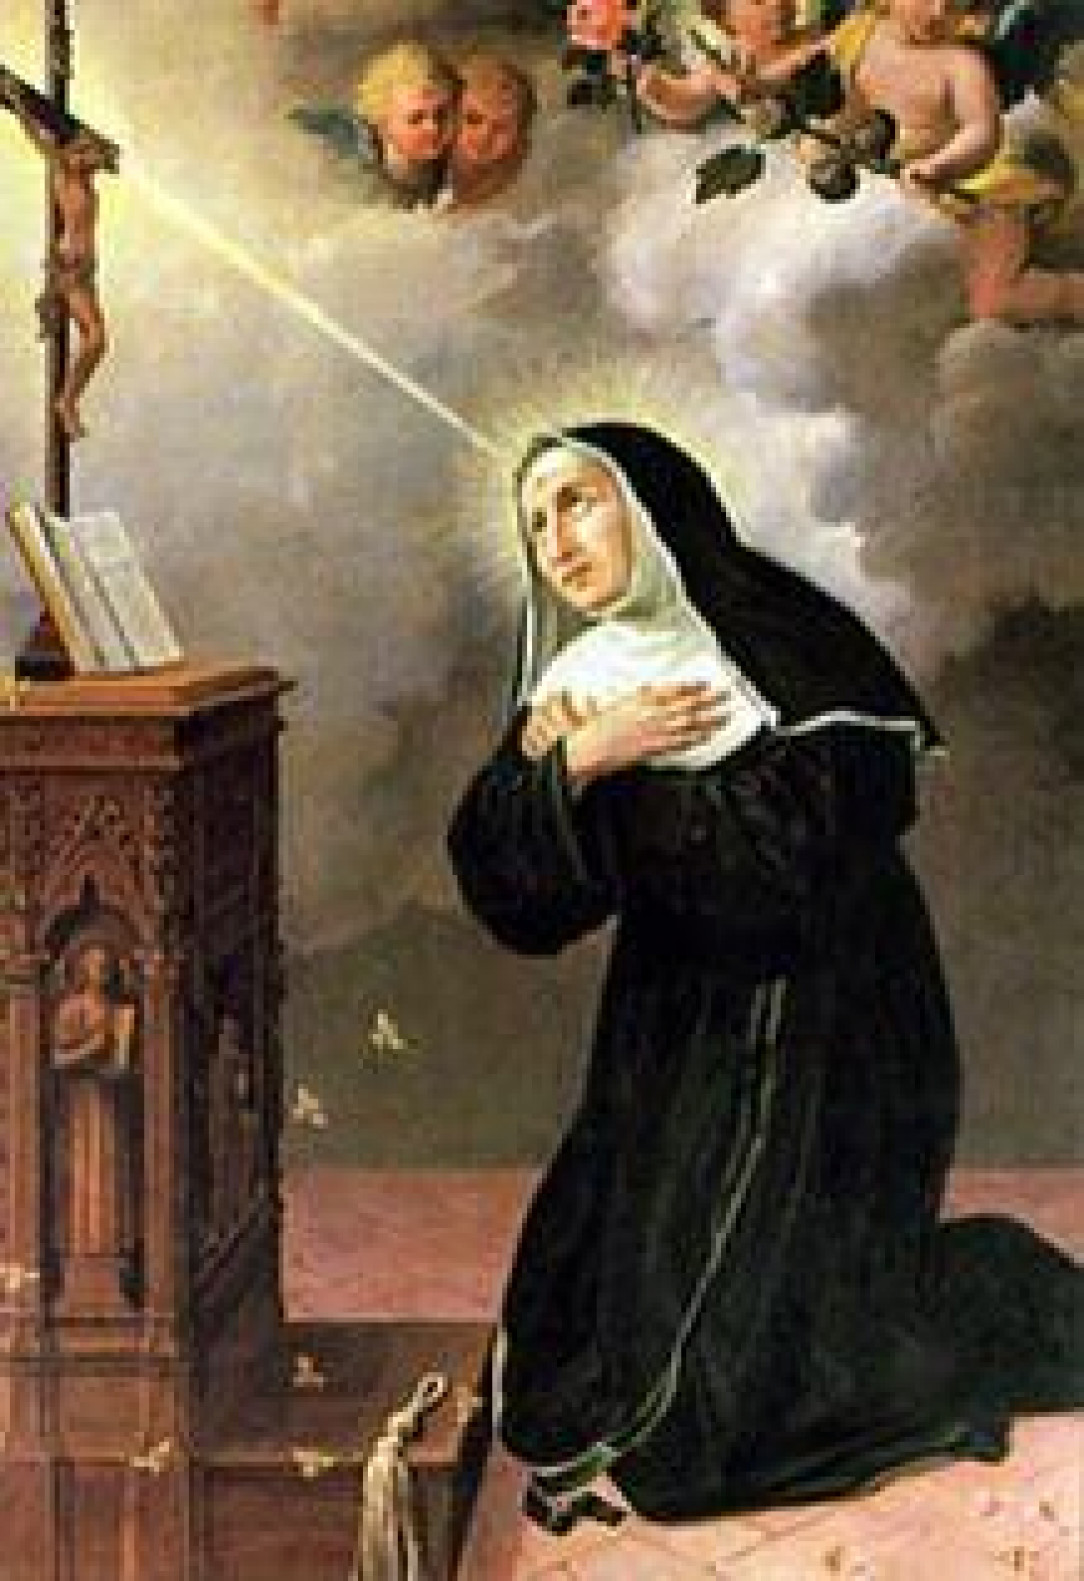 St Rita of Cascia, Patron Saint of impossible causes